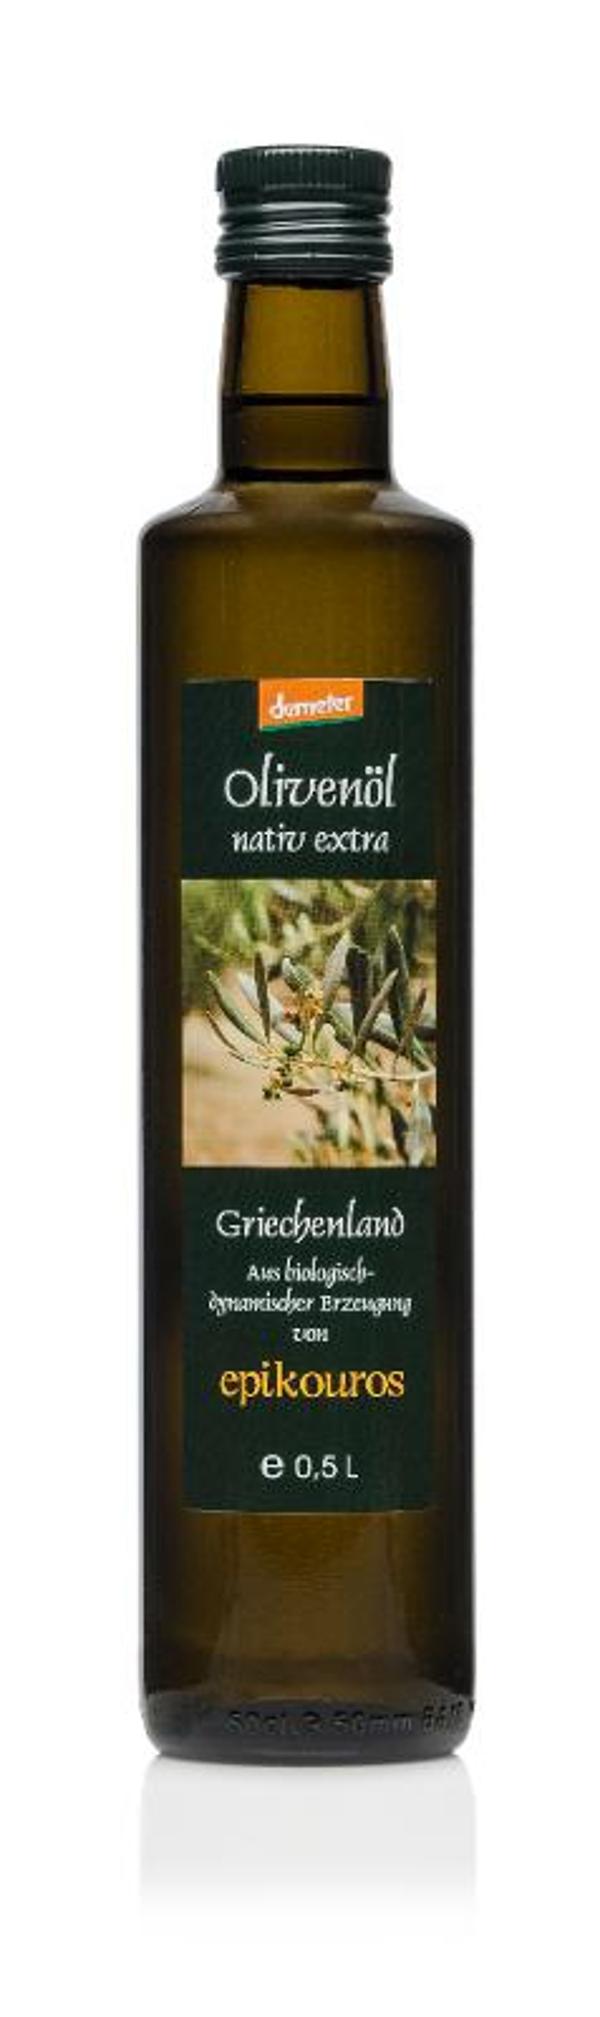 Produktfoto zu Demeter Olivenöl extra nativ